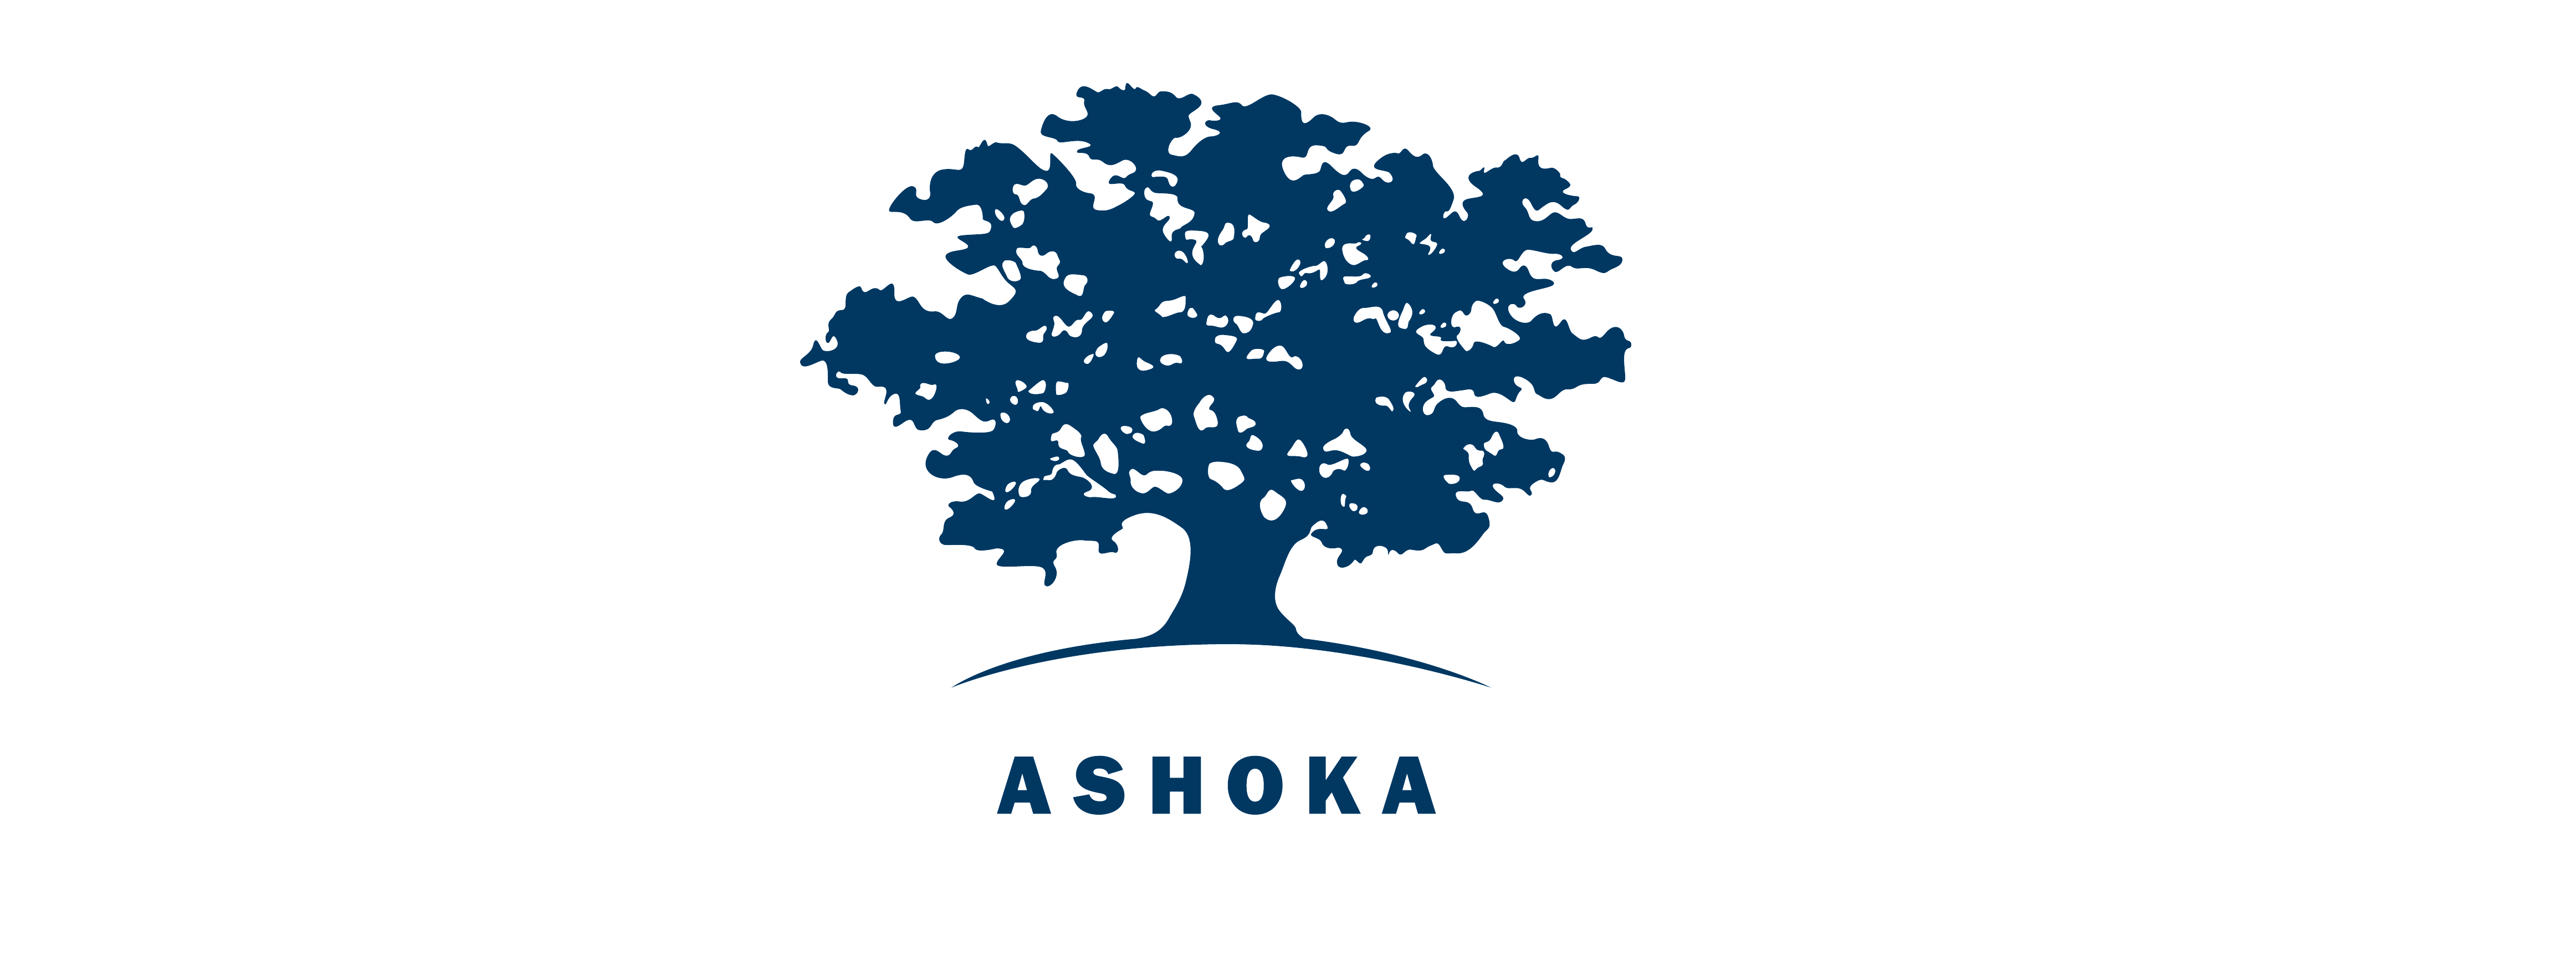 Ashoka logo small